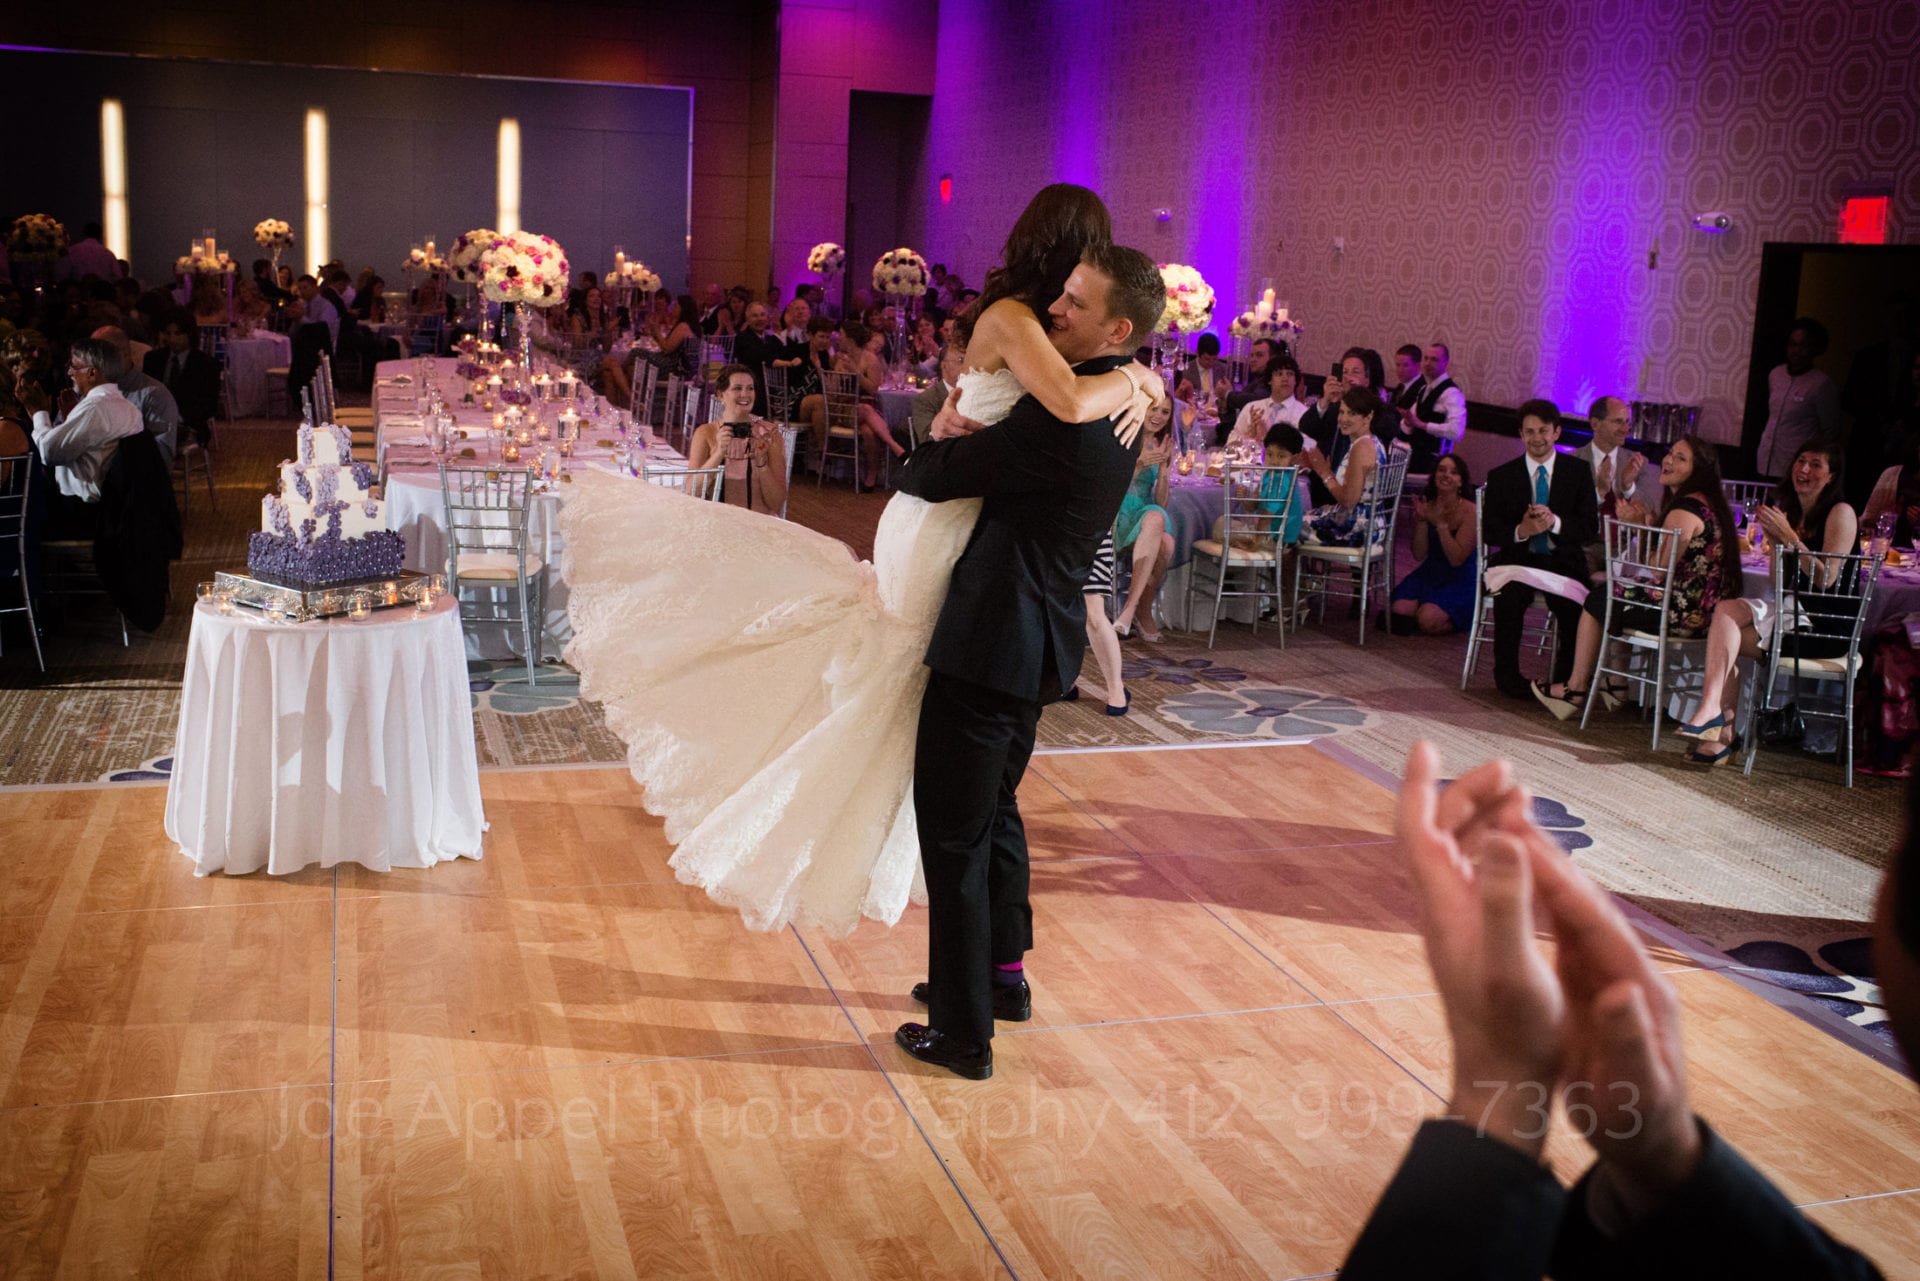 A groom picks up his bride on the dance floor Fairmont Hotel Pittsburgh Weddings.